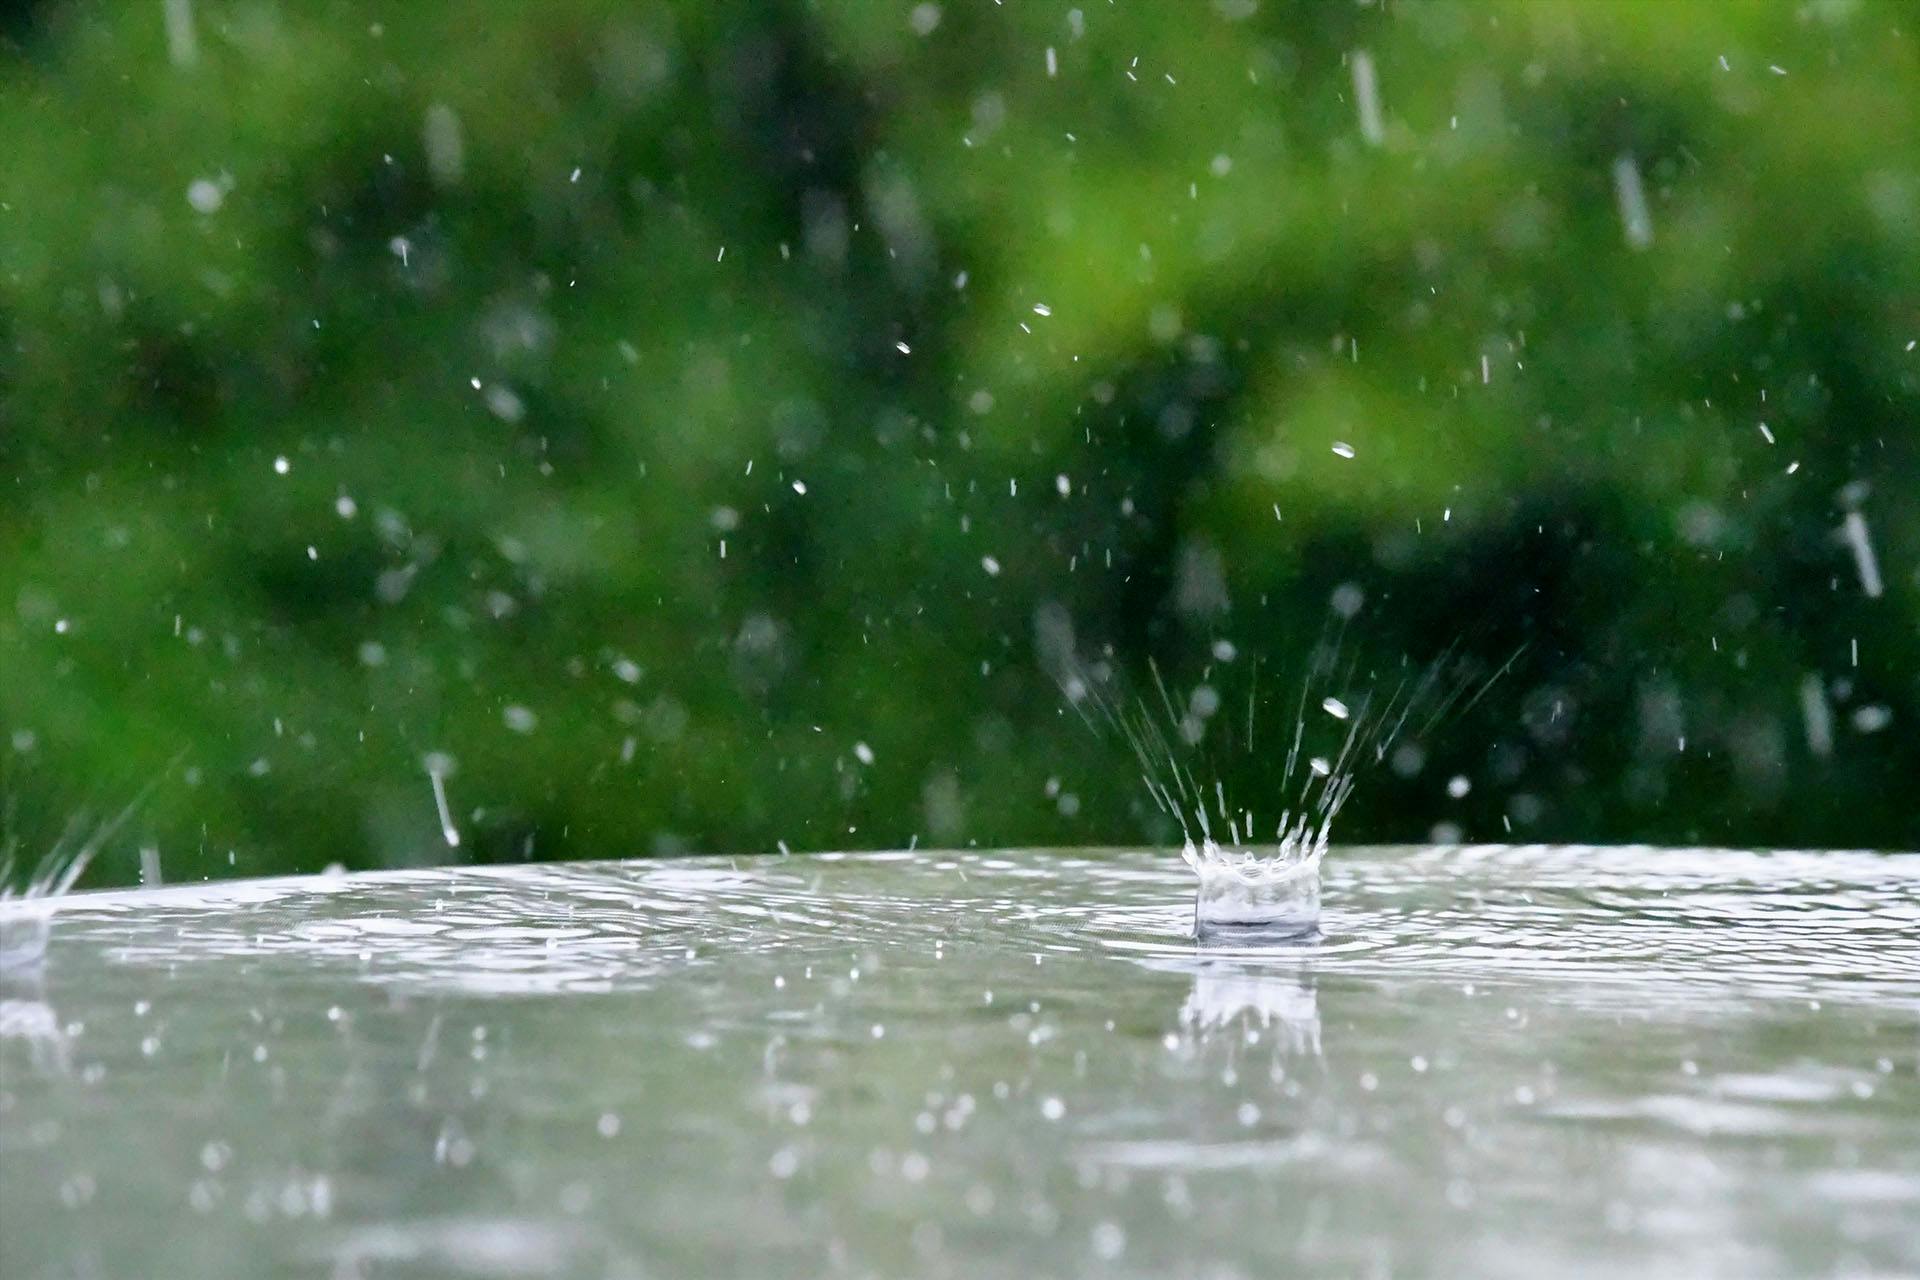 rainwater-harvesting-and-rain-gardens - rain-splashing-on-a-glass-table-during-a-summer-ra-85YVFAR